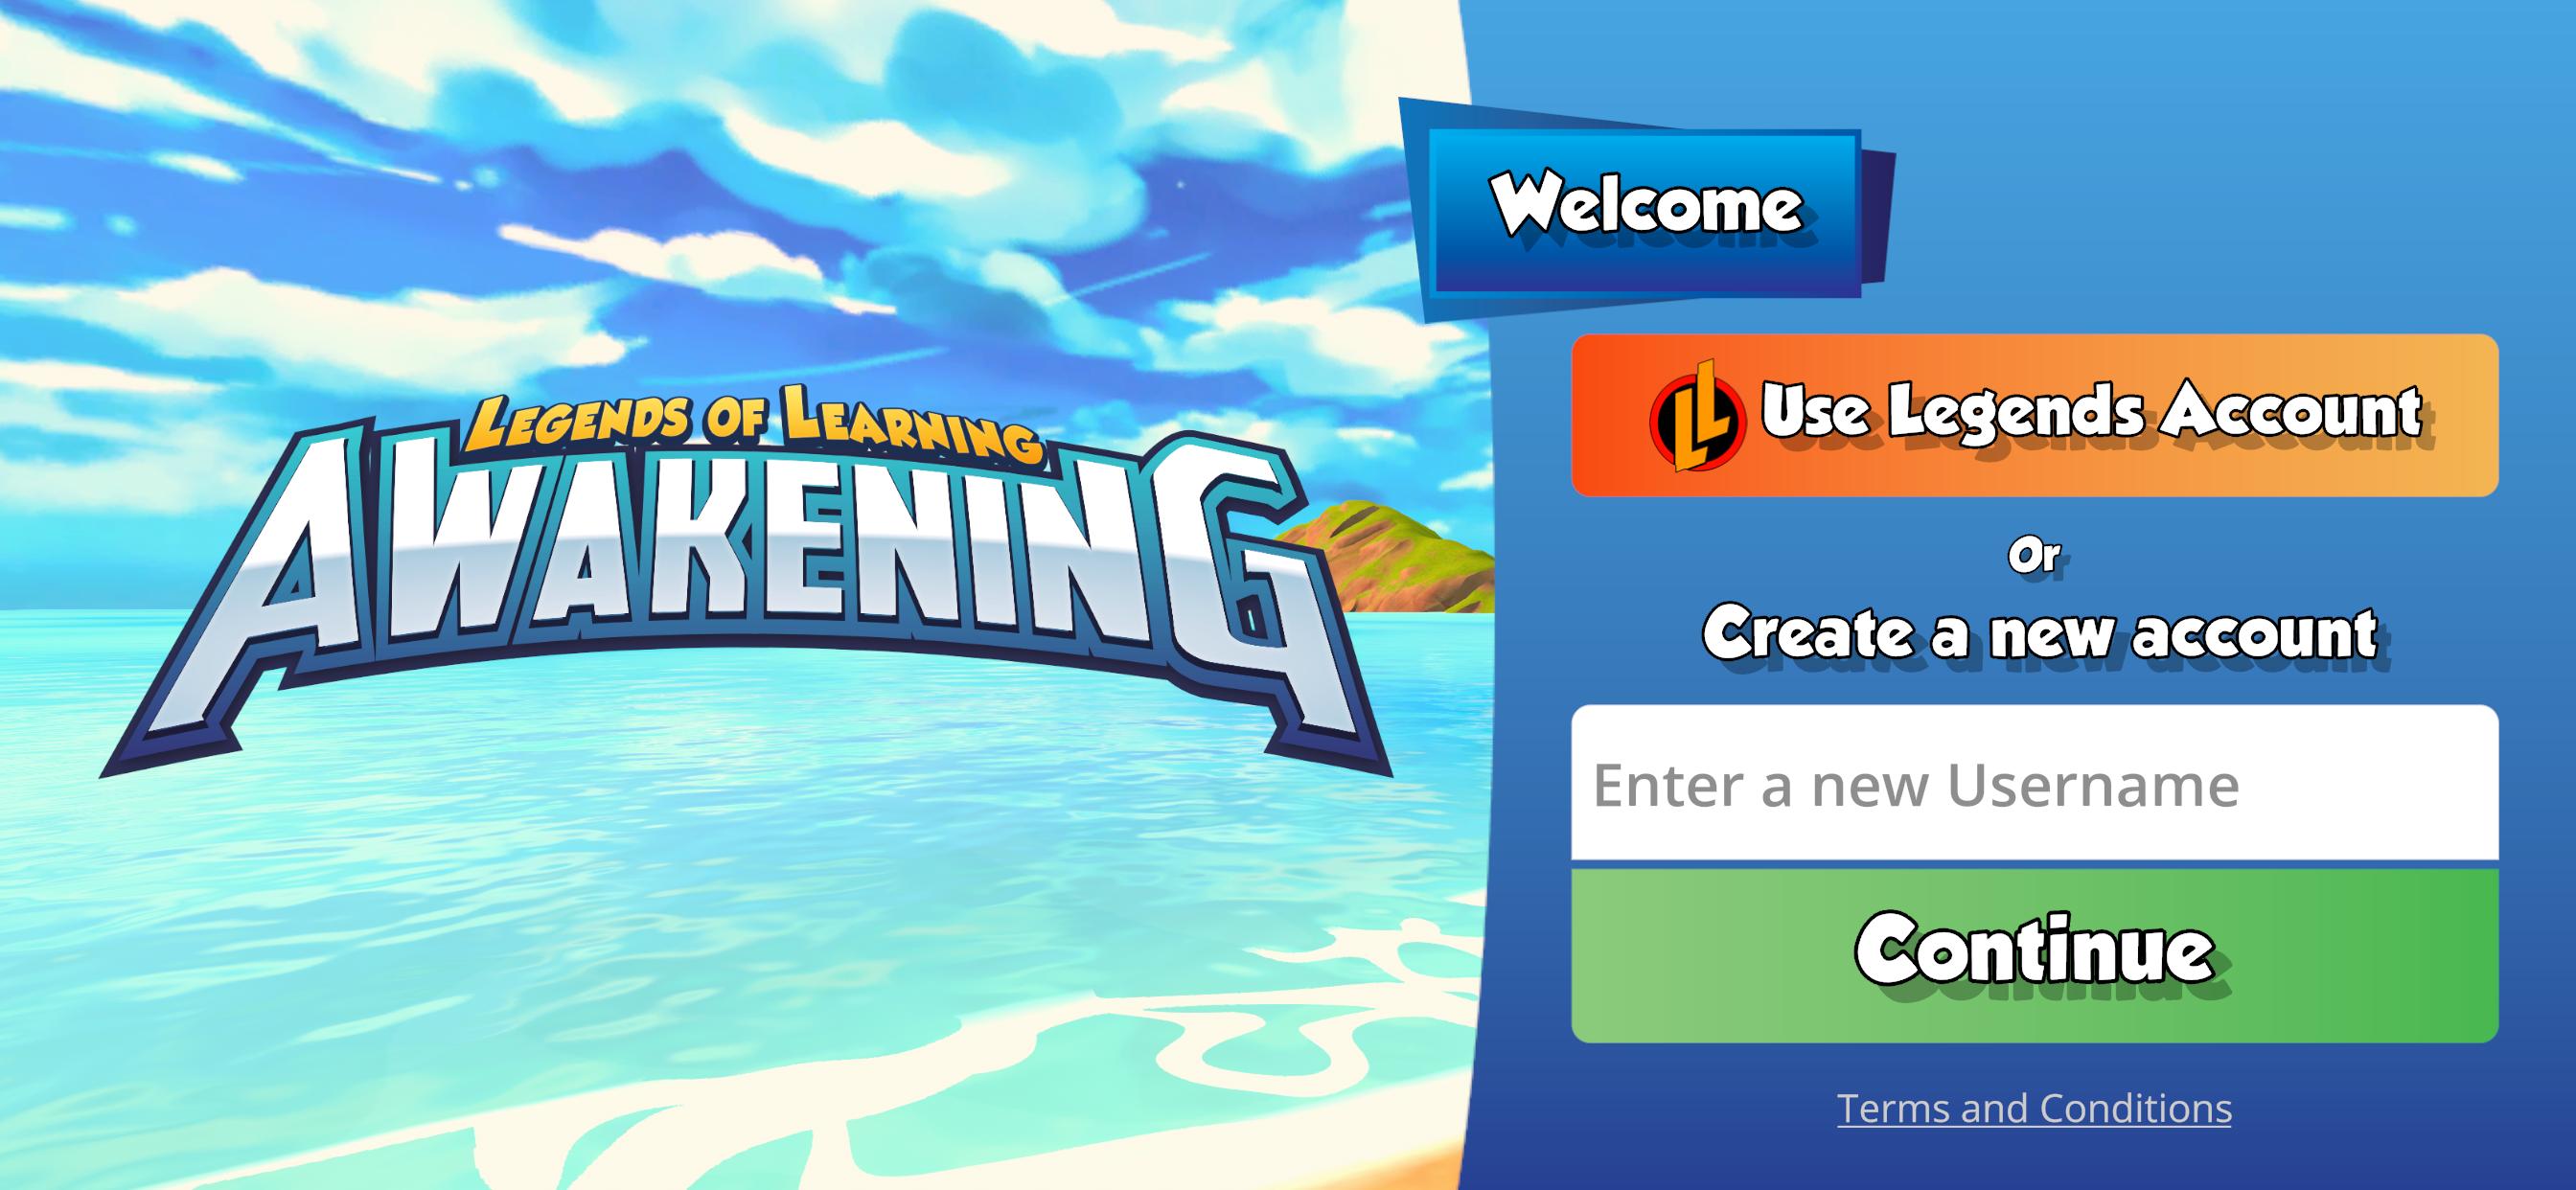 Legends of Learning Awakening 0.5.3 Screenshot 8